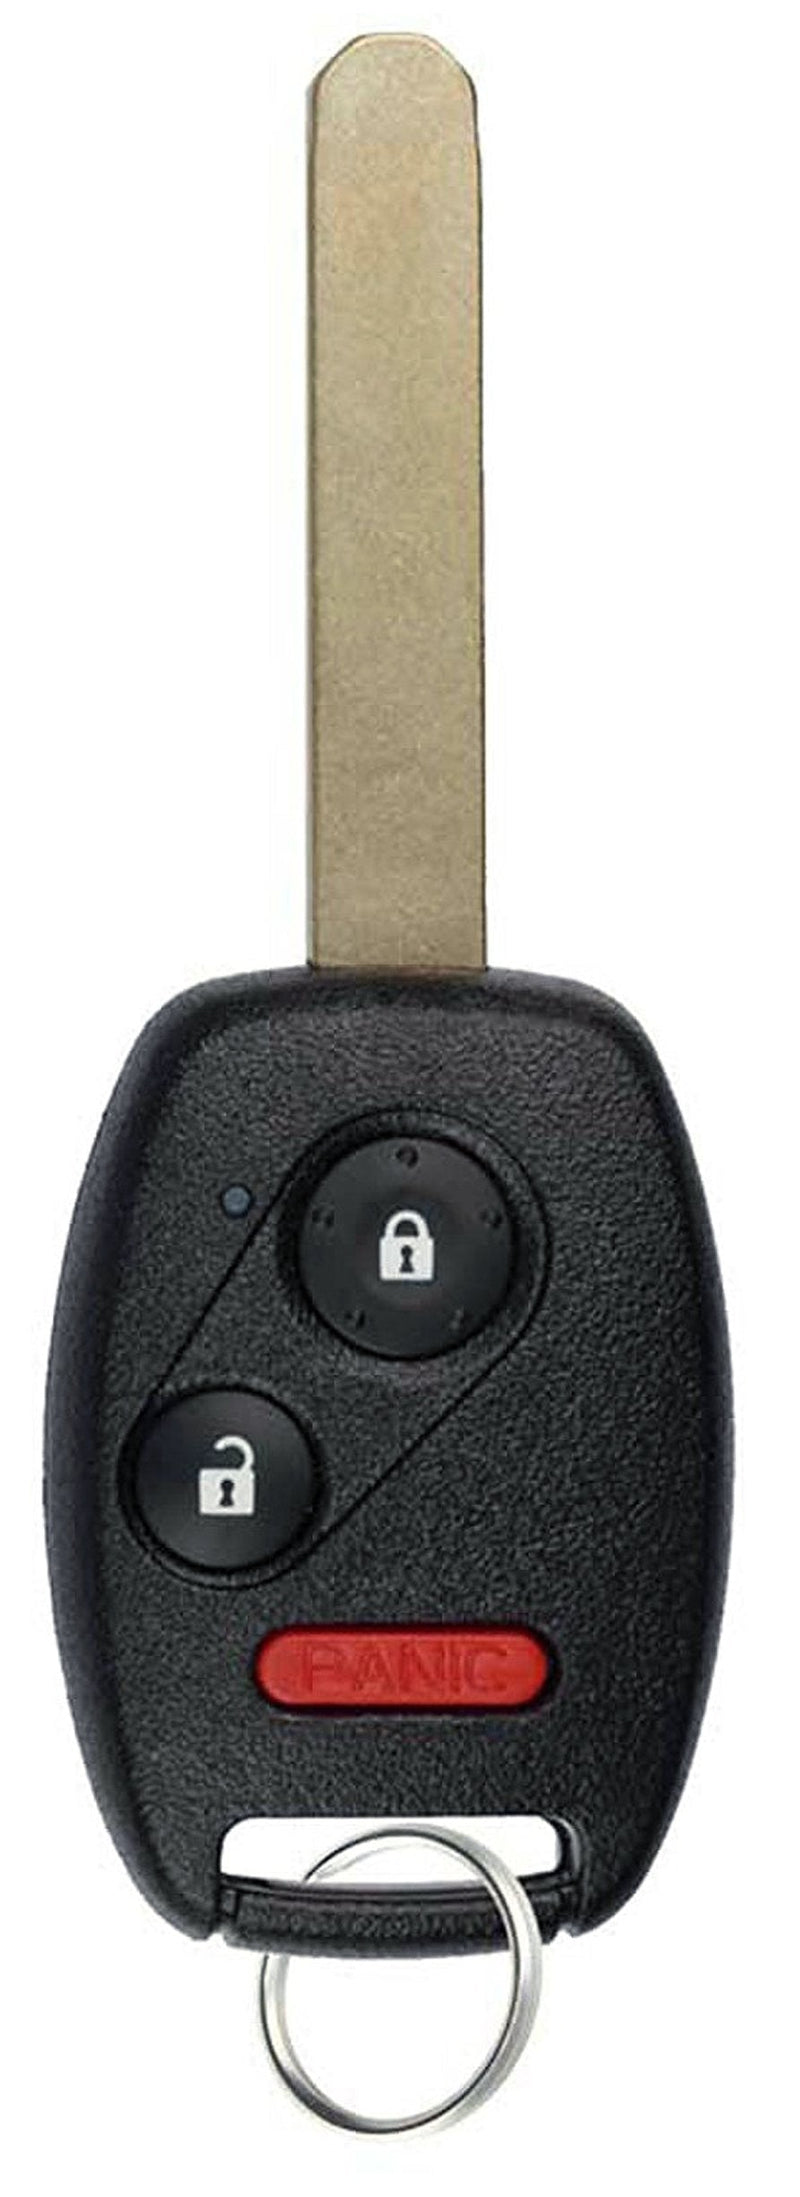  [AUSTRALIA] - KeylessOption Keyless Entry Remote Control Uncut Car Ignition Key Fob Replacement for MLBHLIK-1T